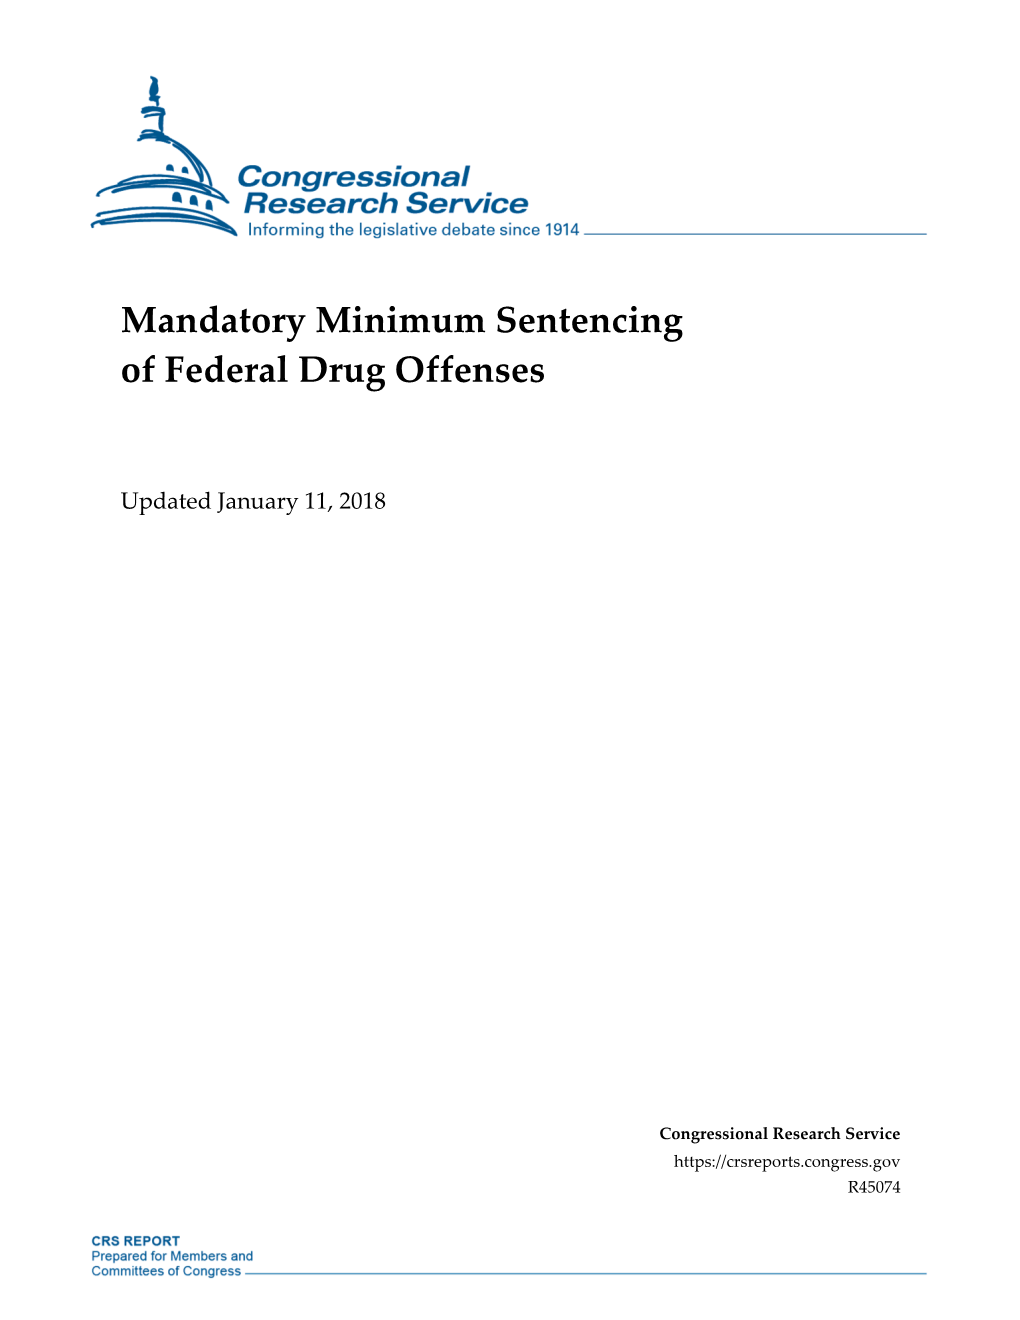 Mandatory Minimum Sentencing of Federal Drug Offenses